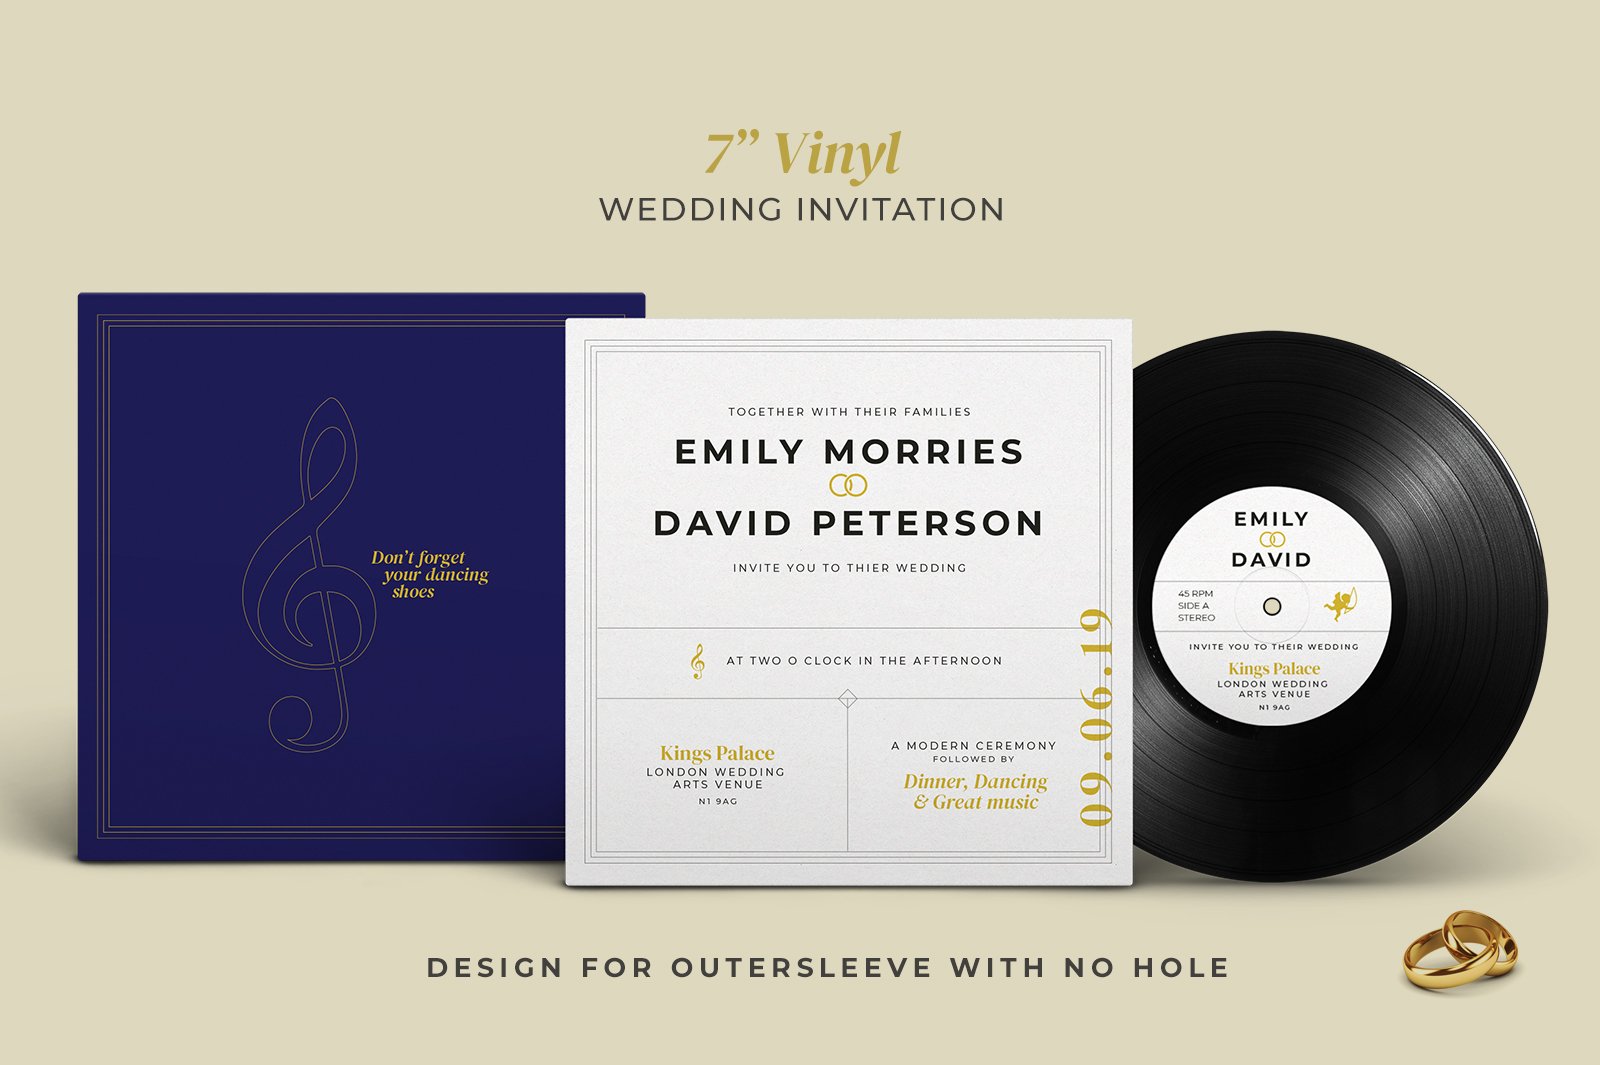 7" Vinyl Record Wedding Invitation preview image.